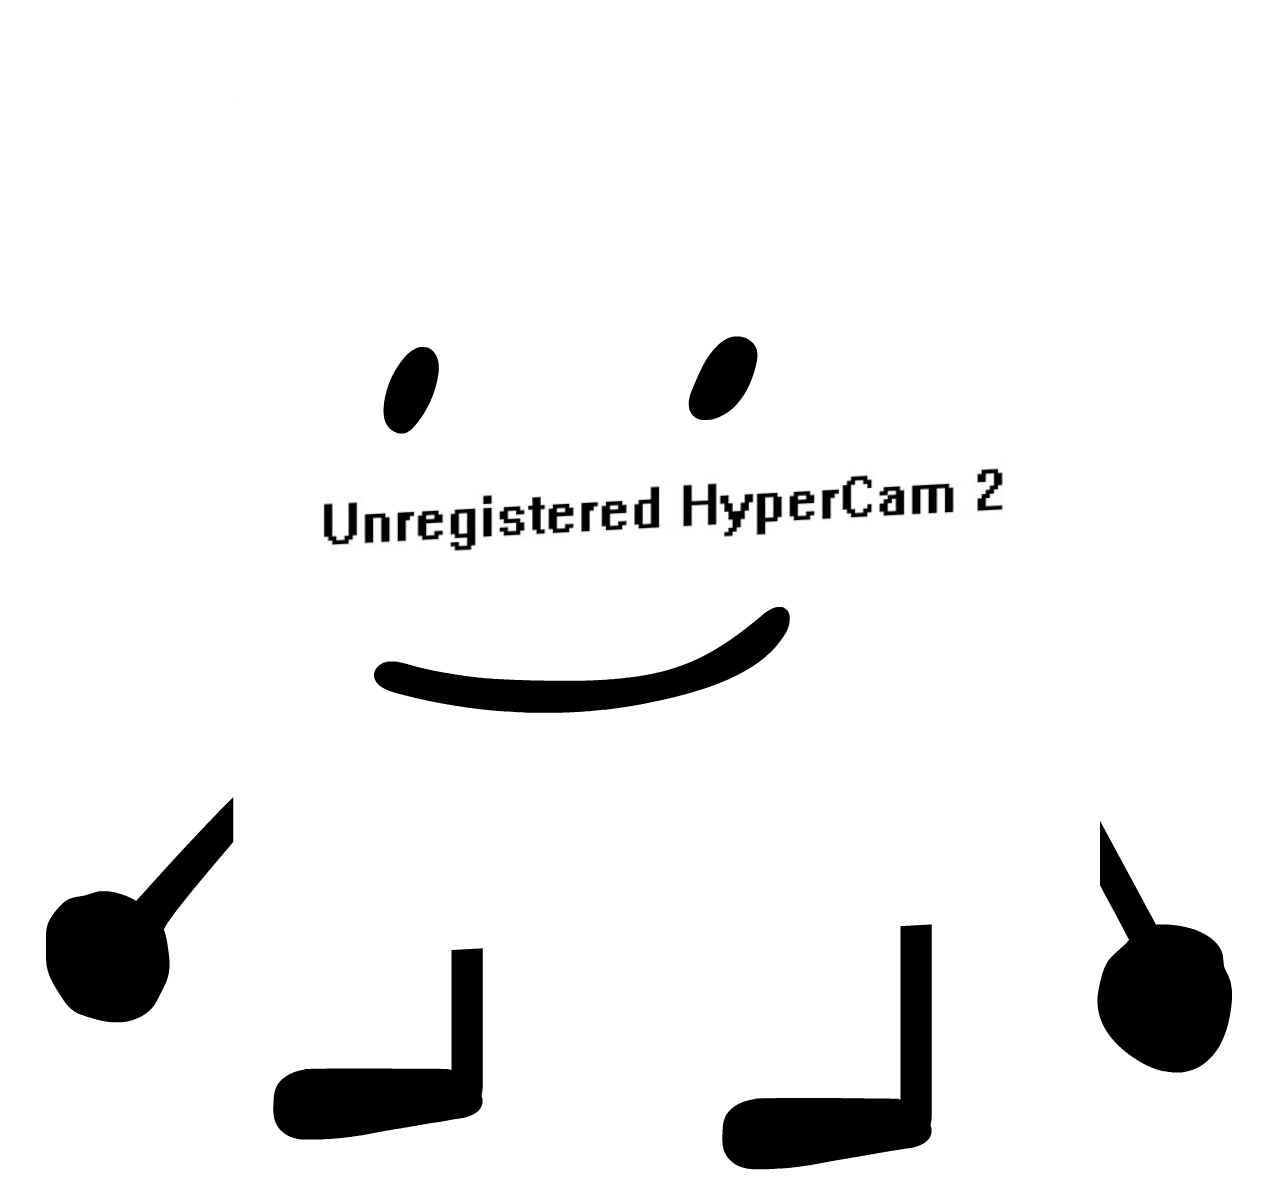 unregistered hypercam 2